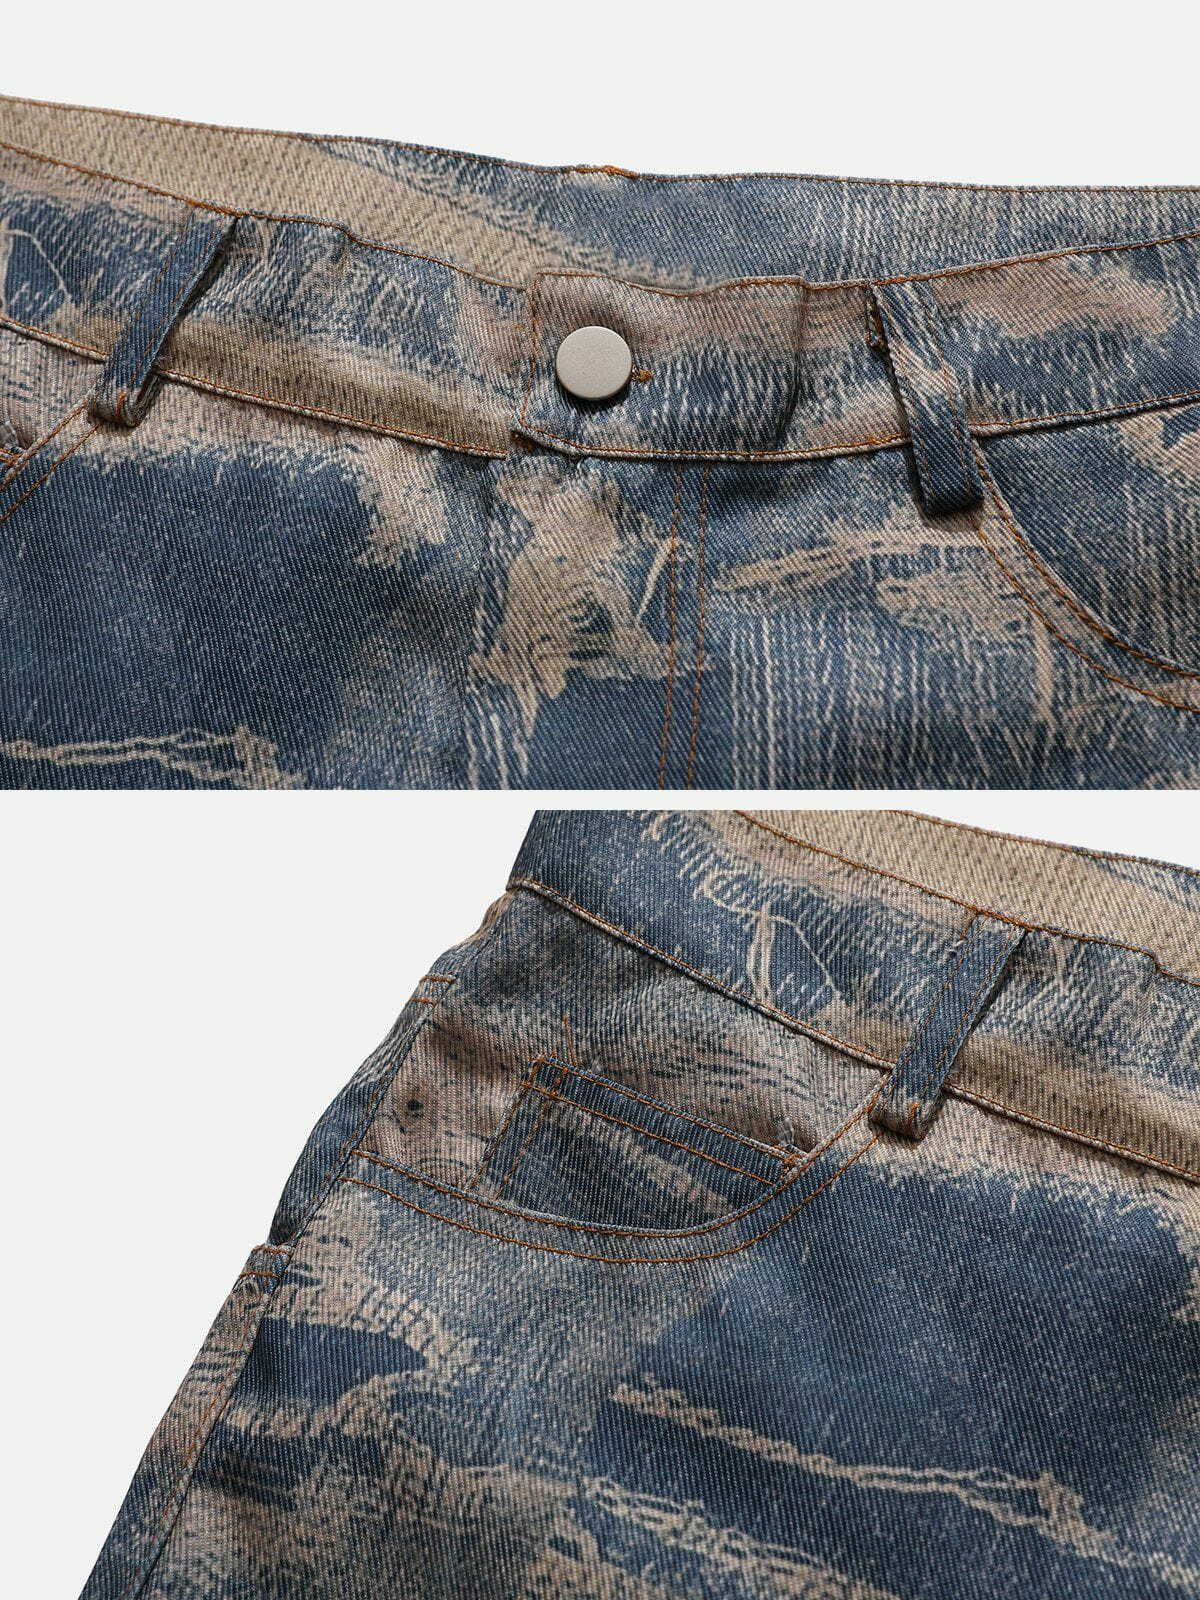 trendy camouflage tie dye jeans edgy & vibrant streetwear 8712